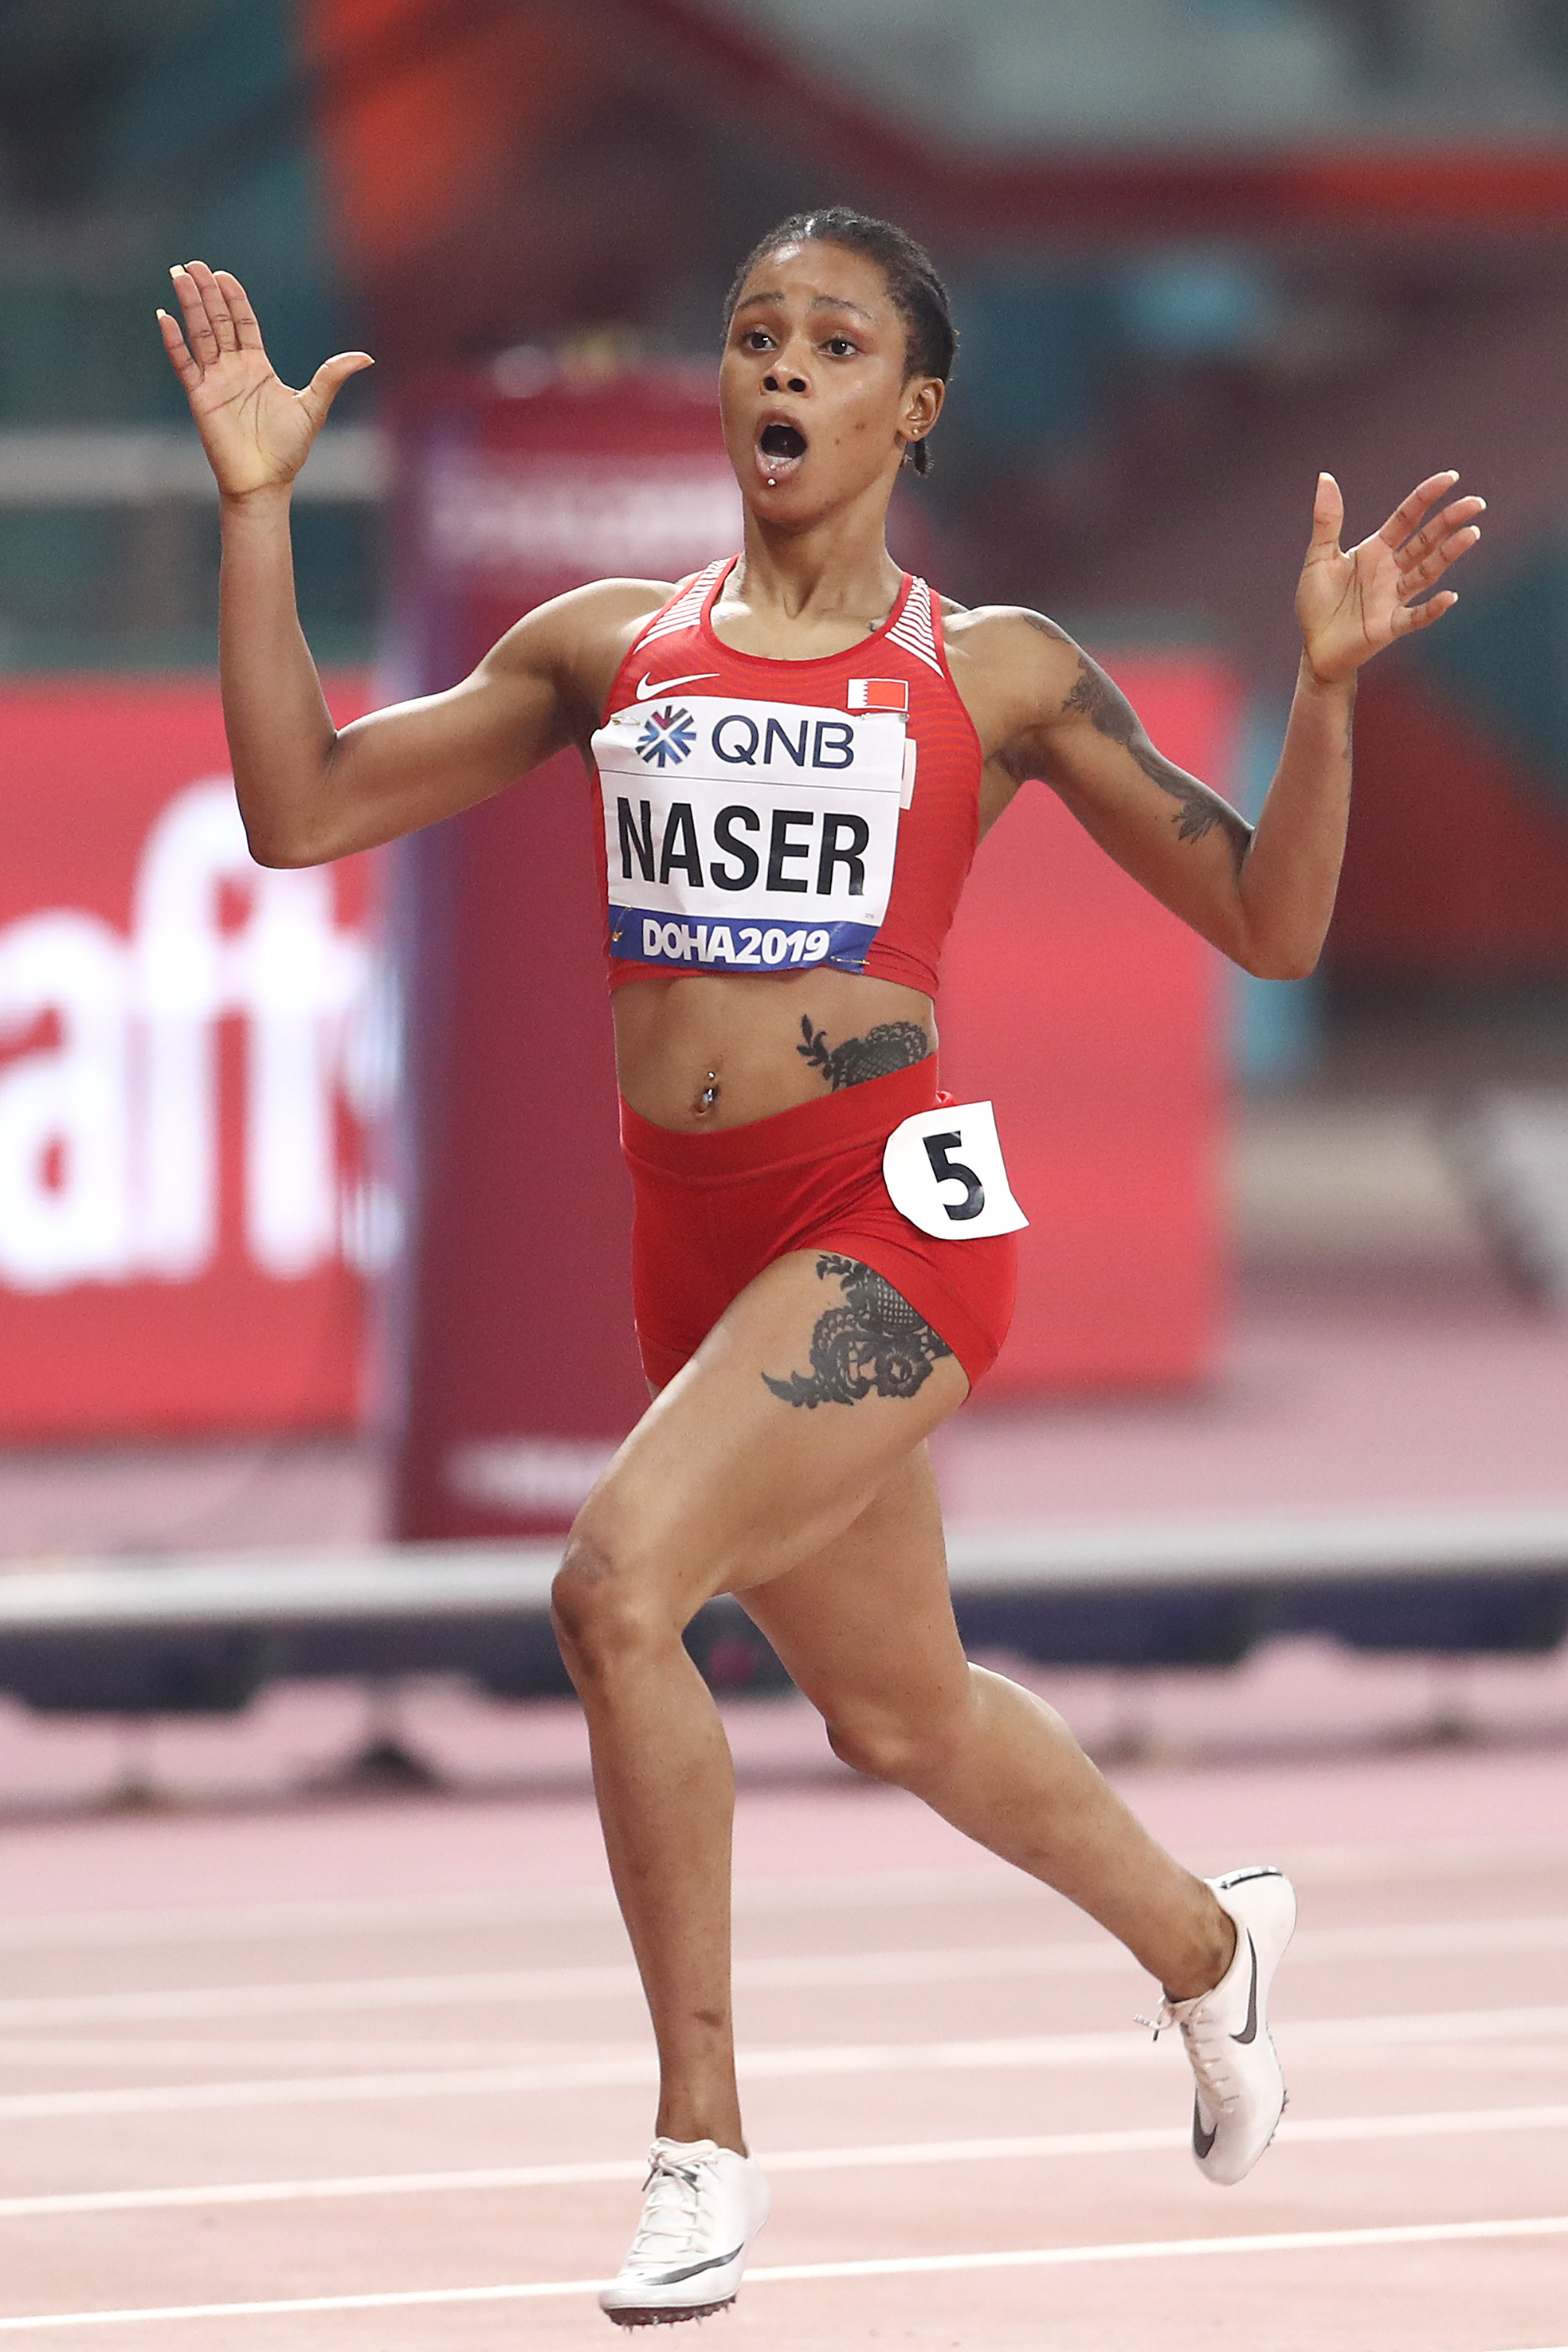 World 400m champion Naser faces 2-year ban